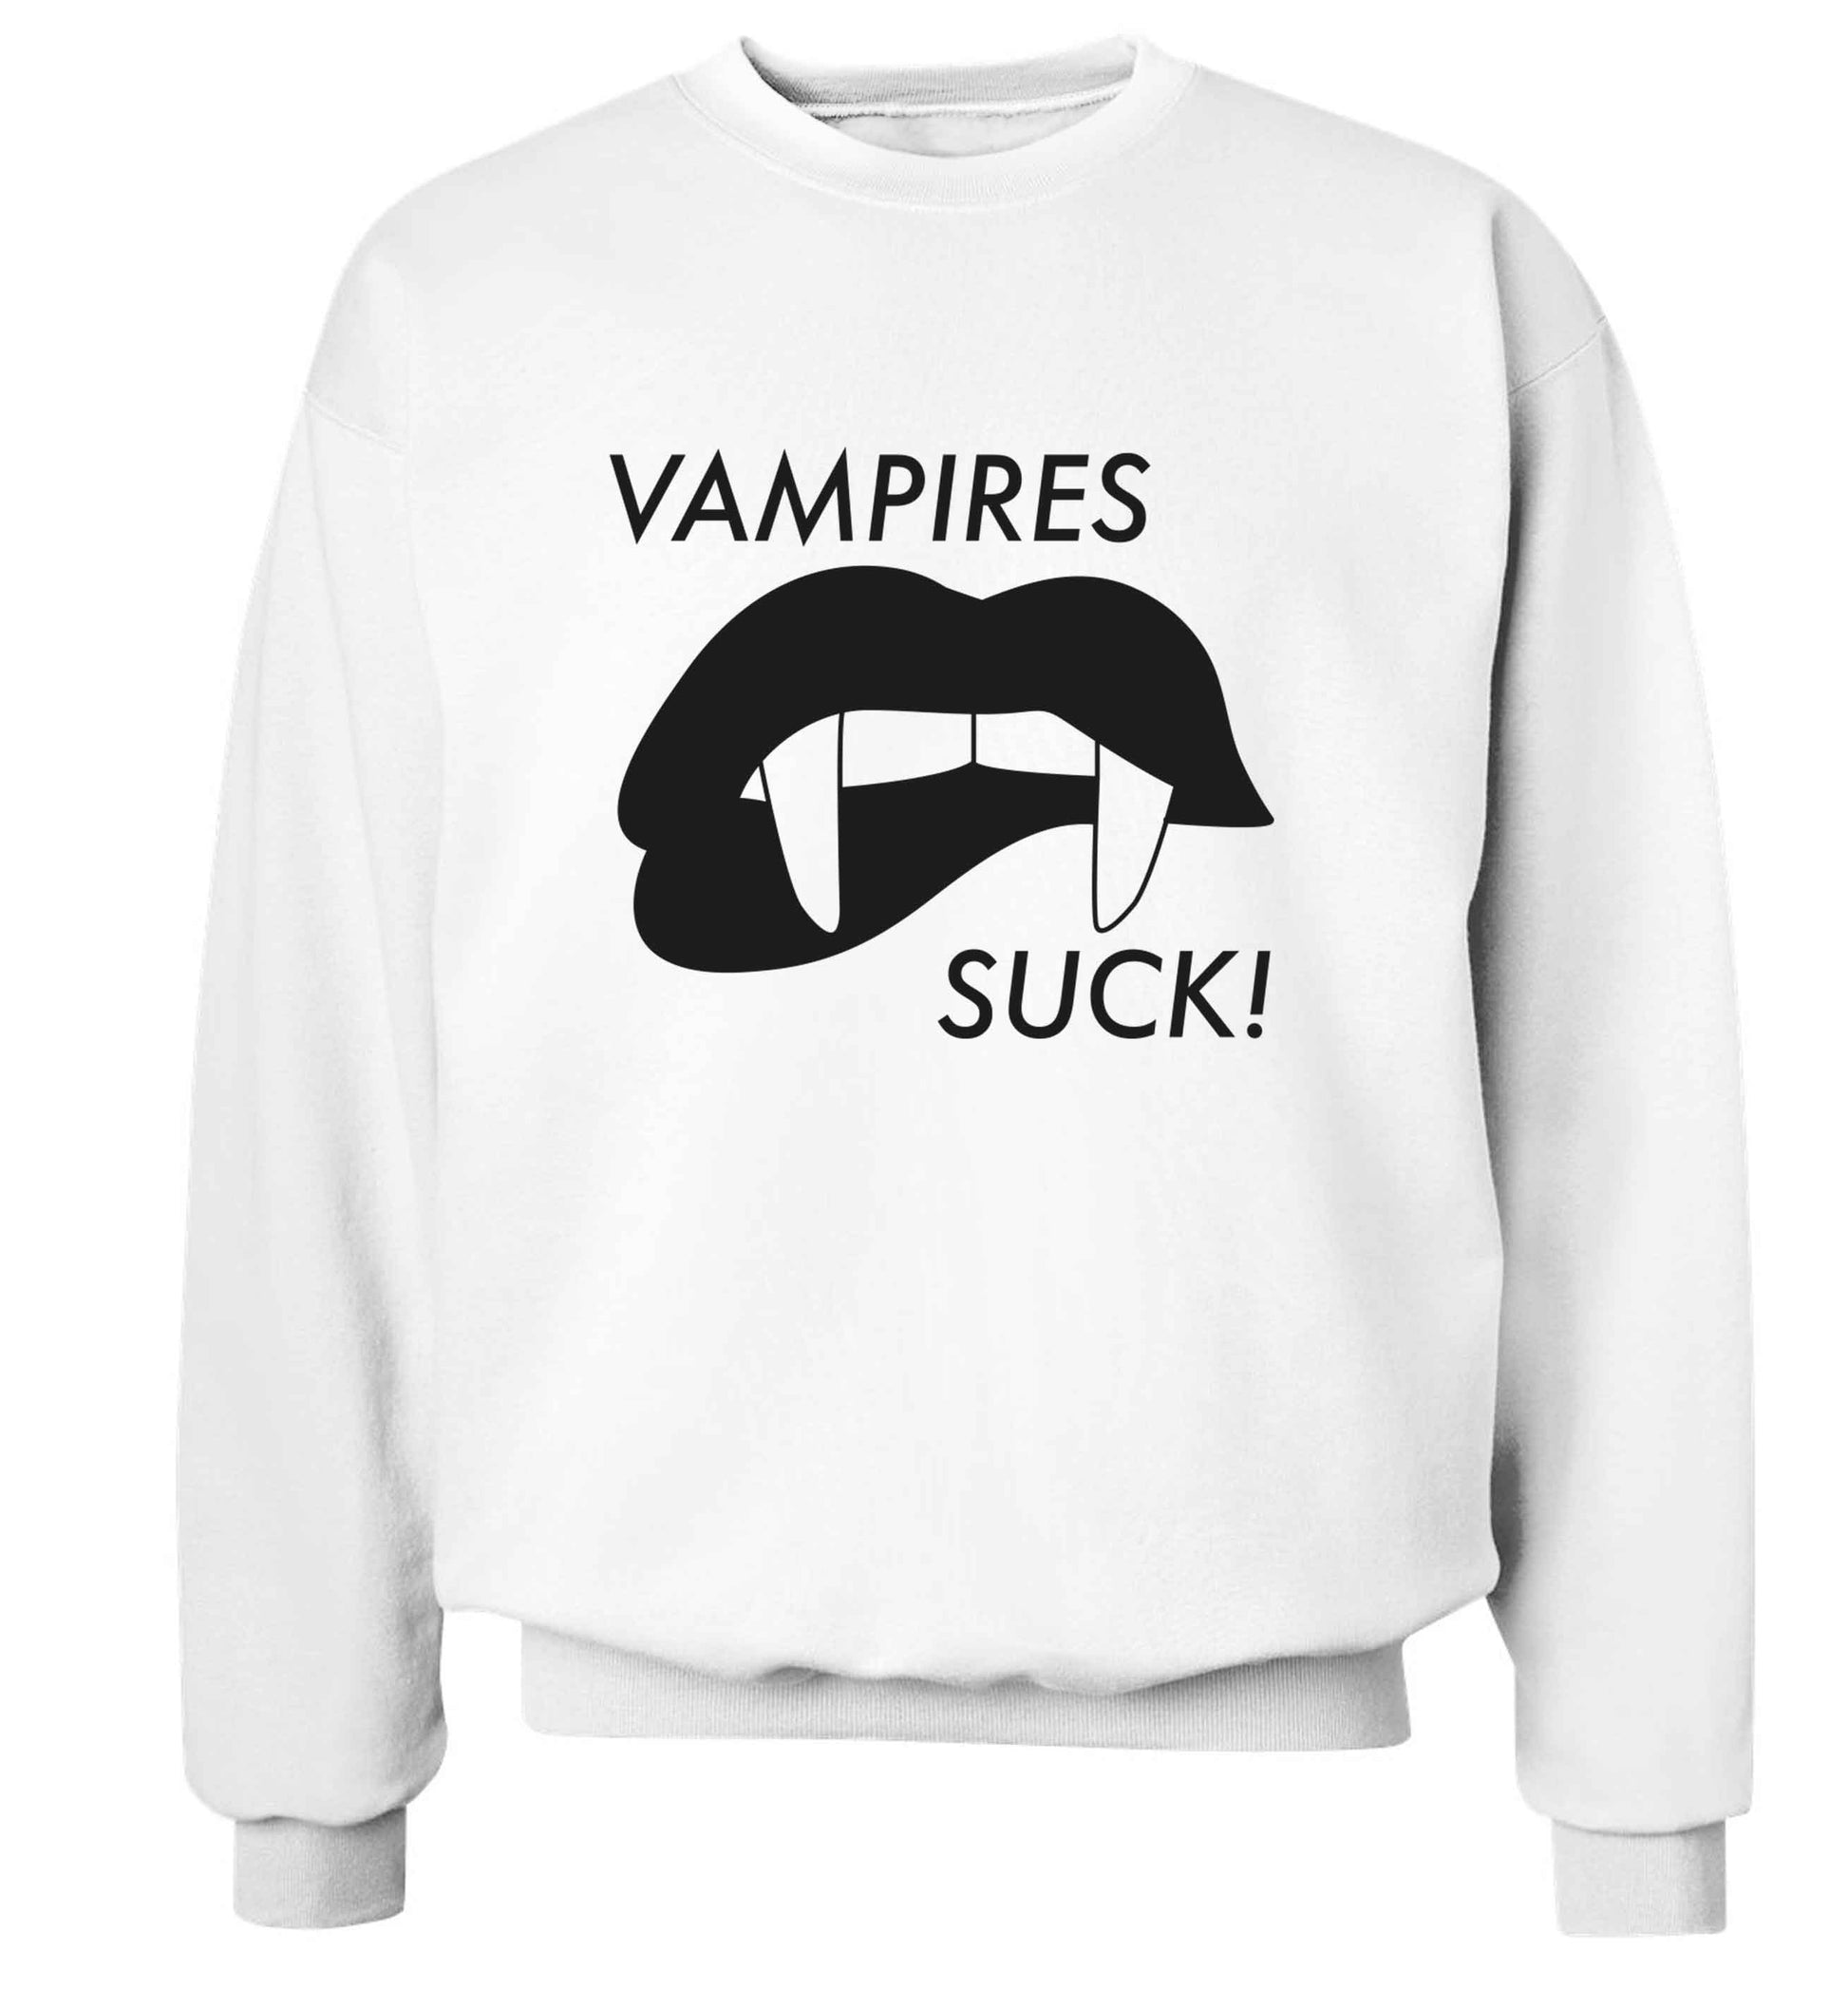 Vampires suck adult's unisex white sweater 2XL